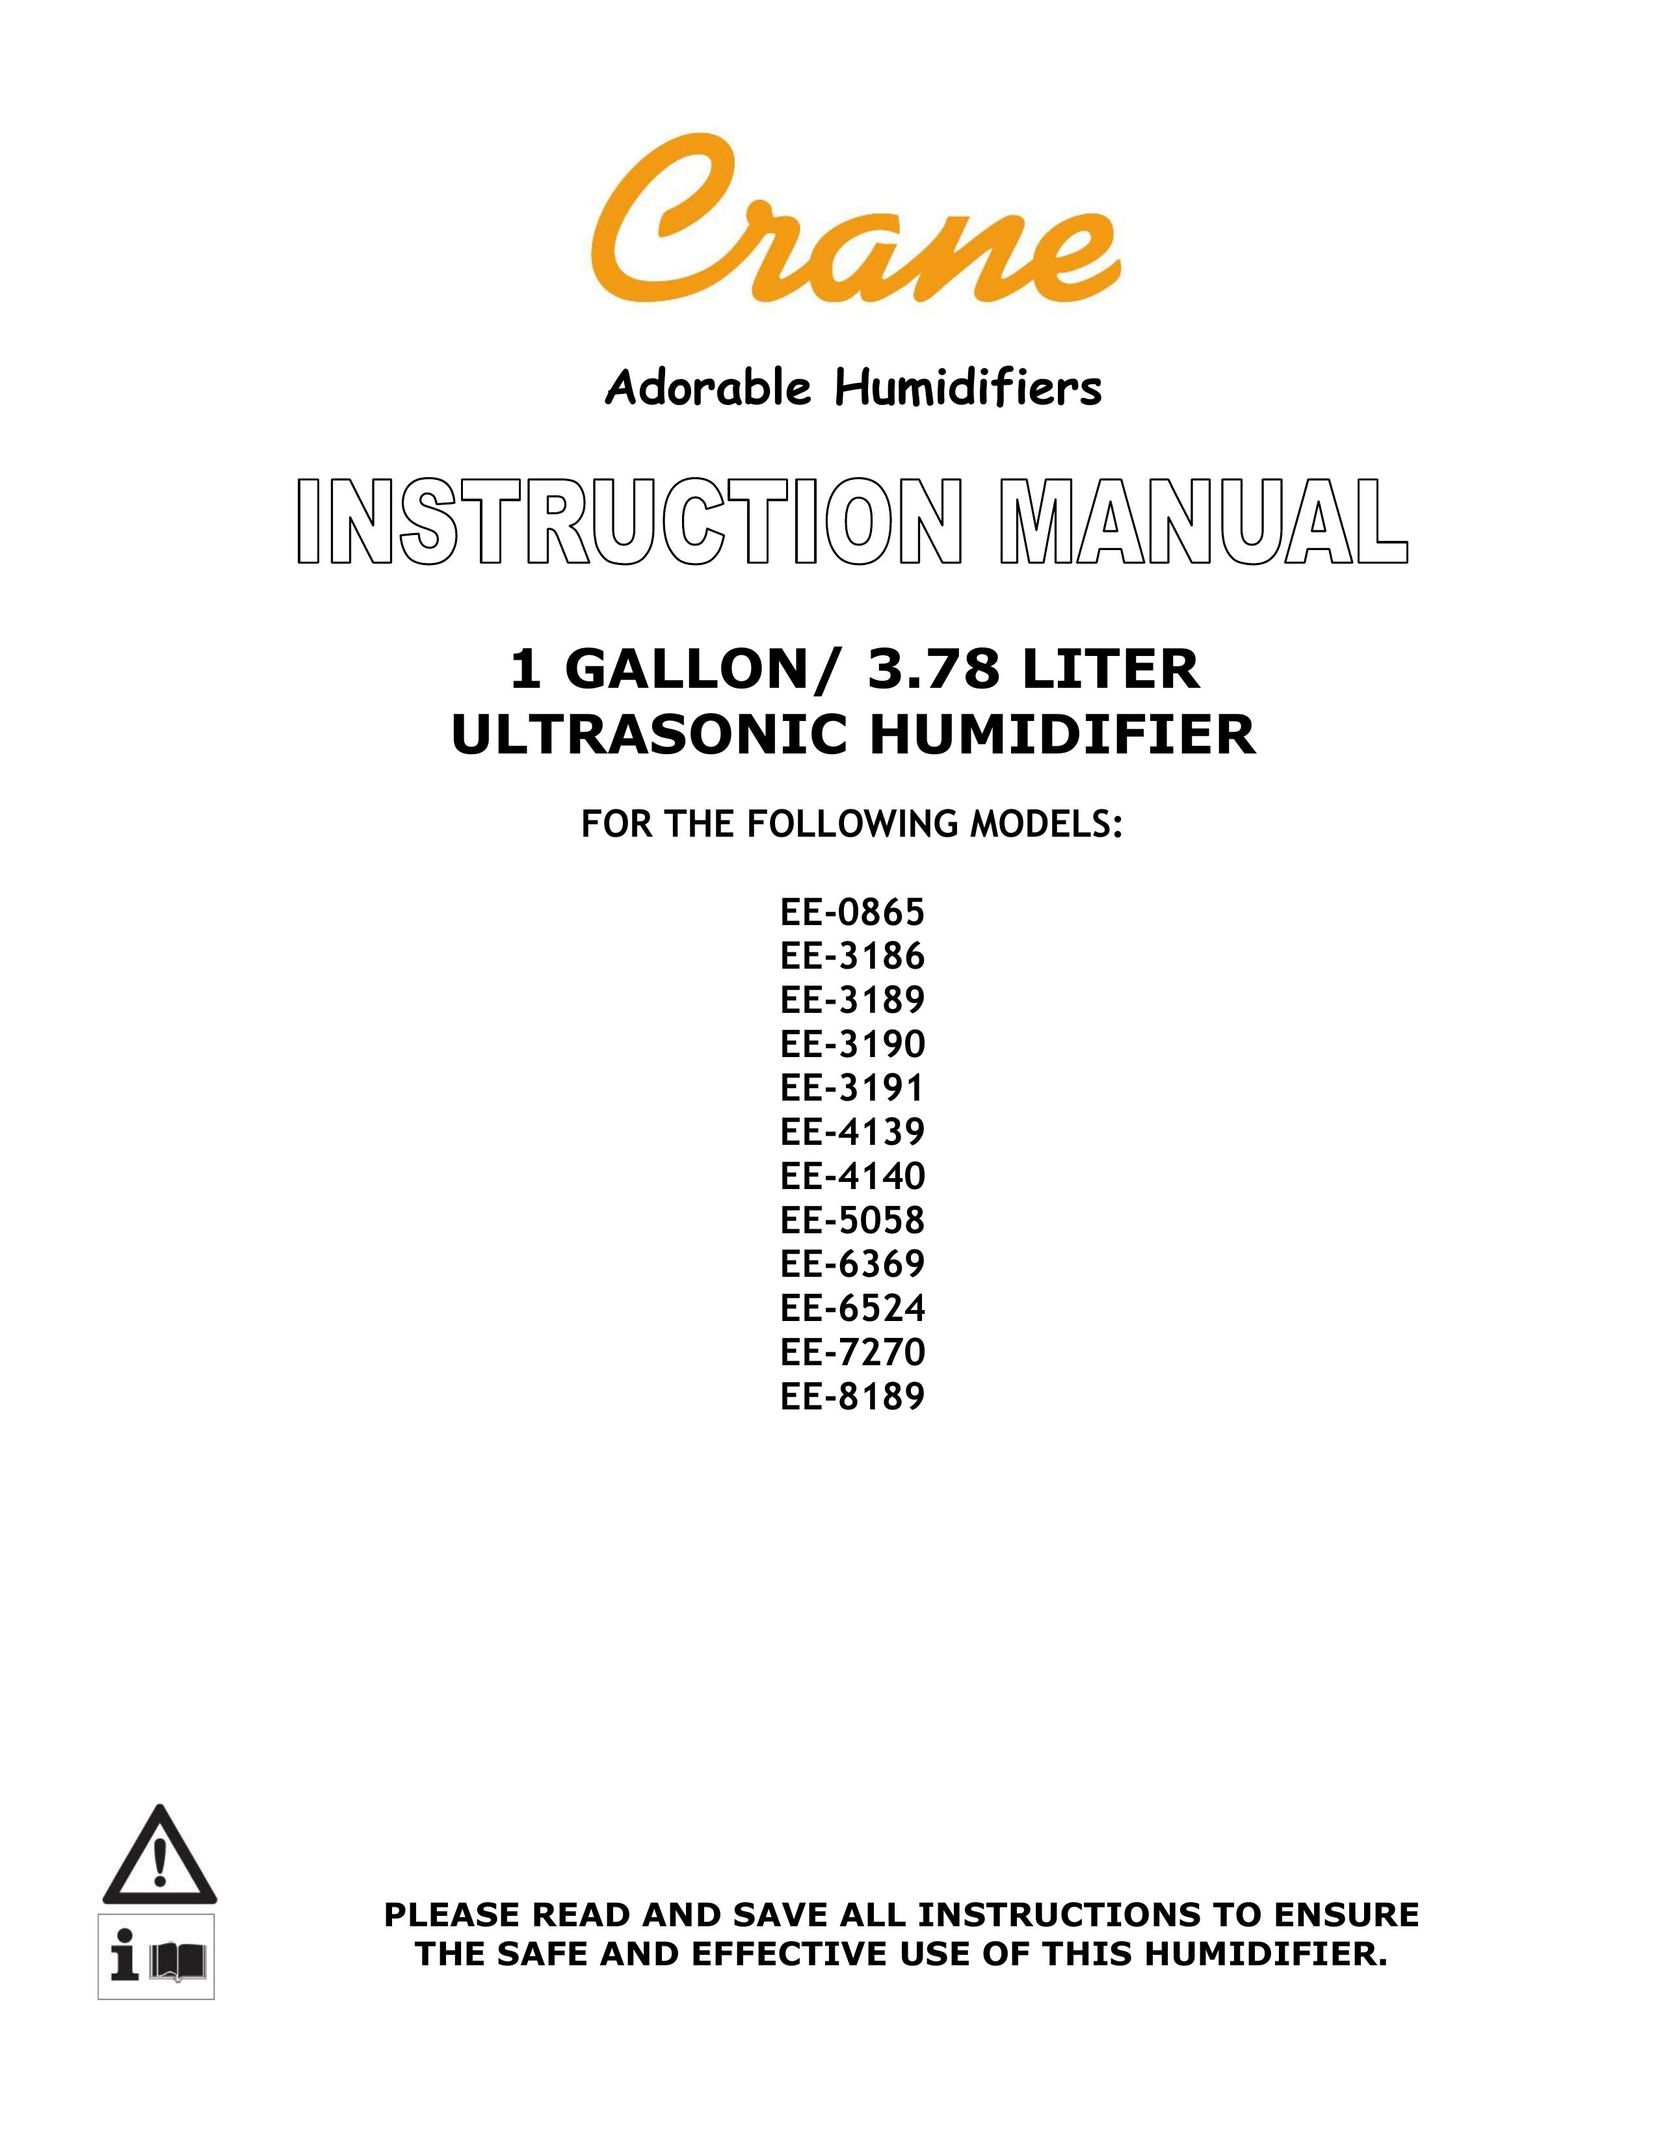 Crane EE-3189 Humidifier User Manual